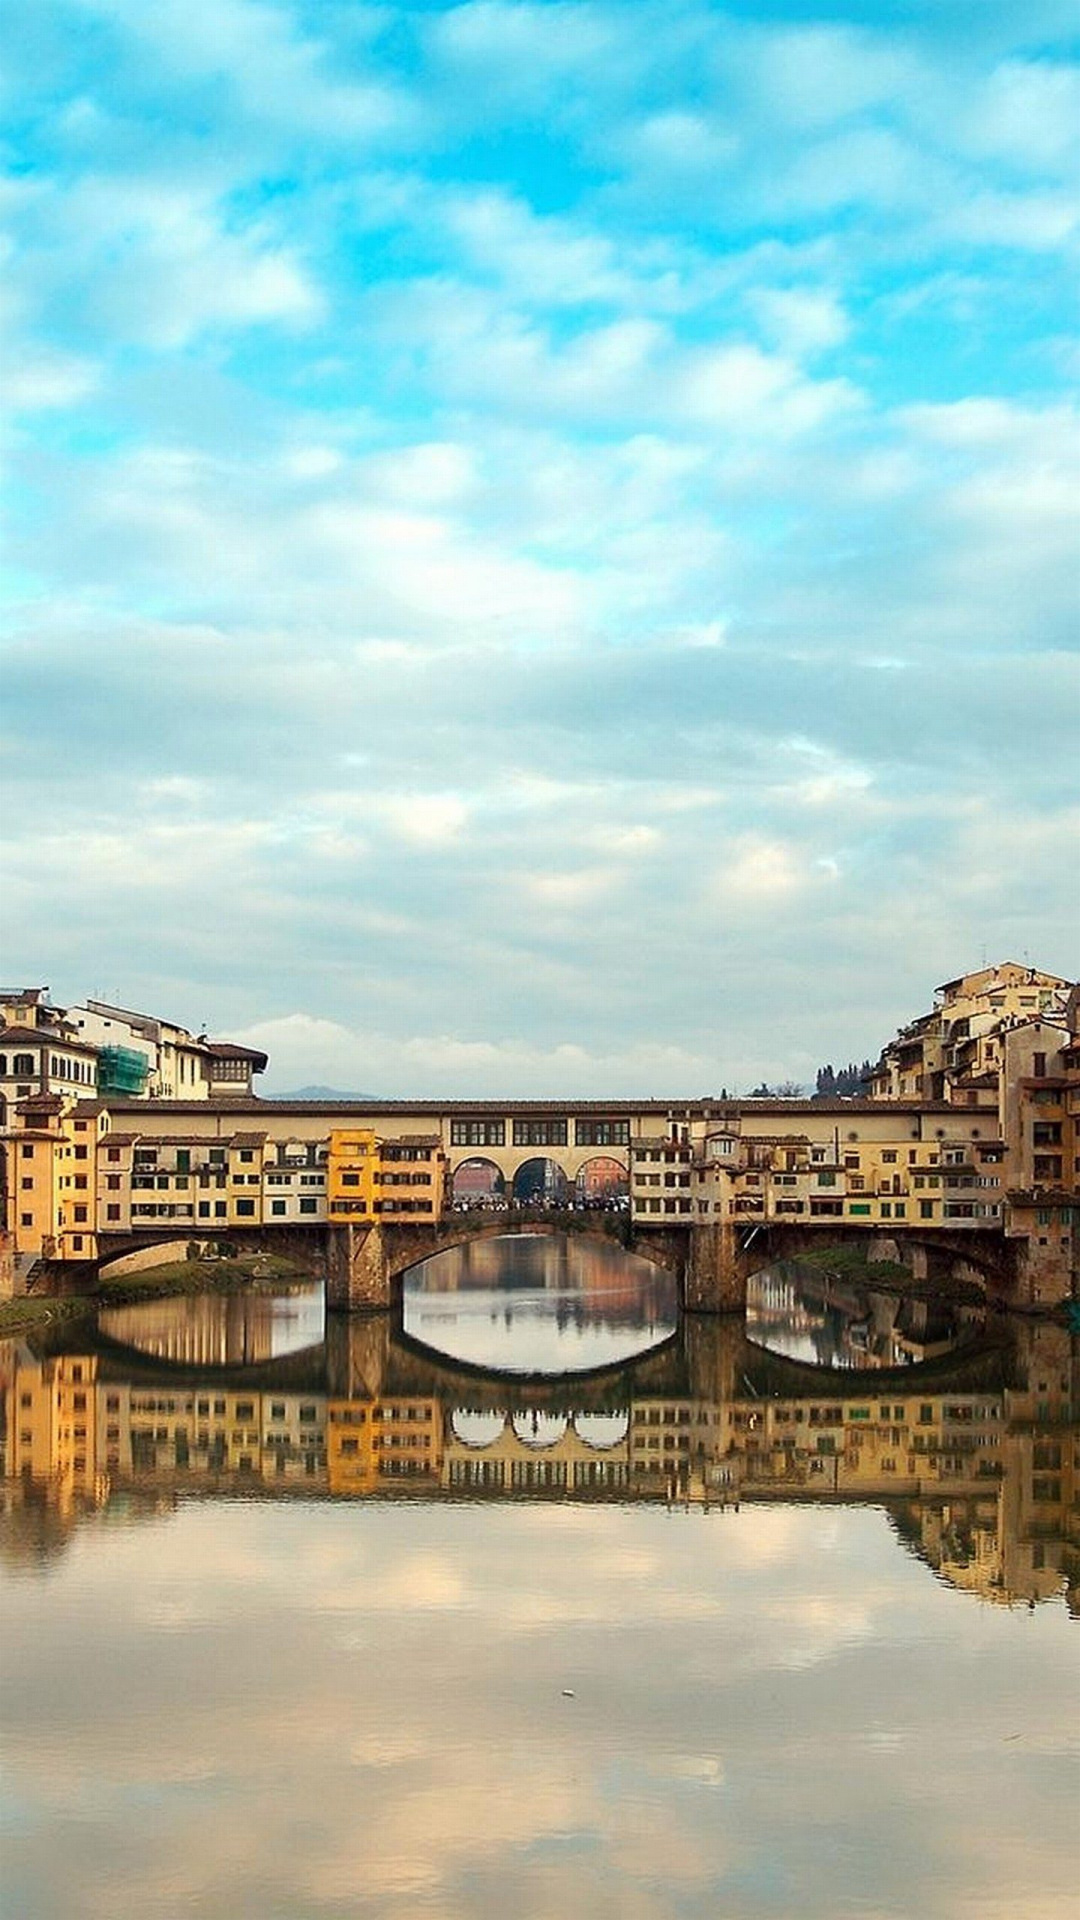 Sonnenuntergang über der Ponte Vecchio Brücke, 1080x1920 Full HD Handy